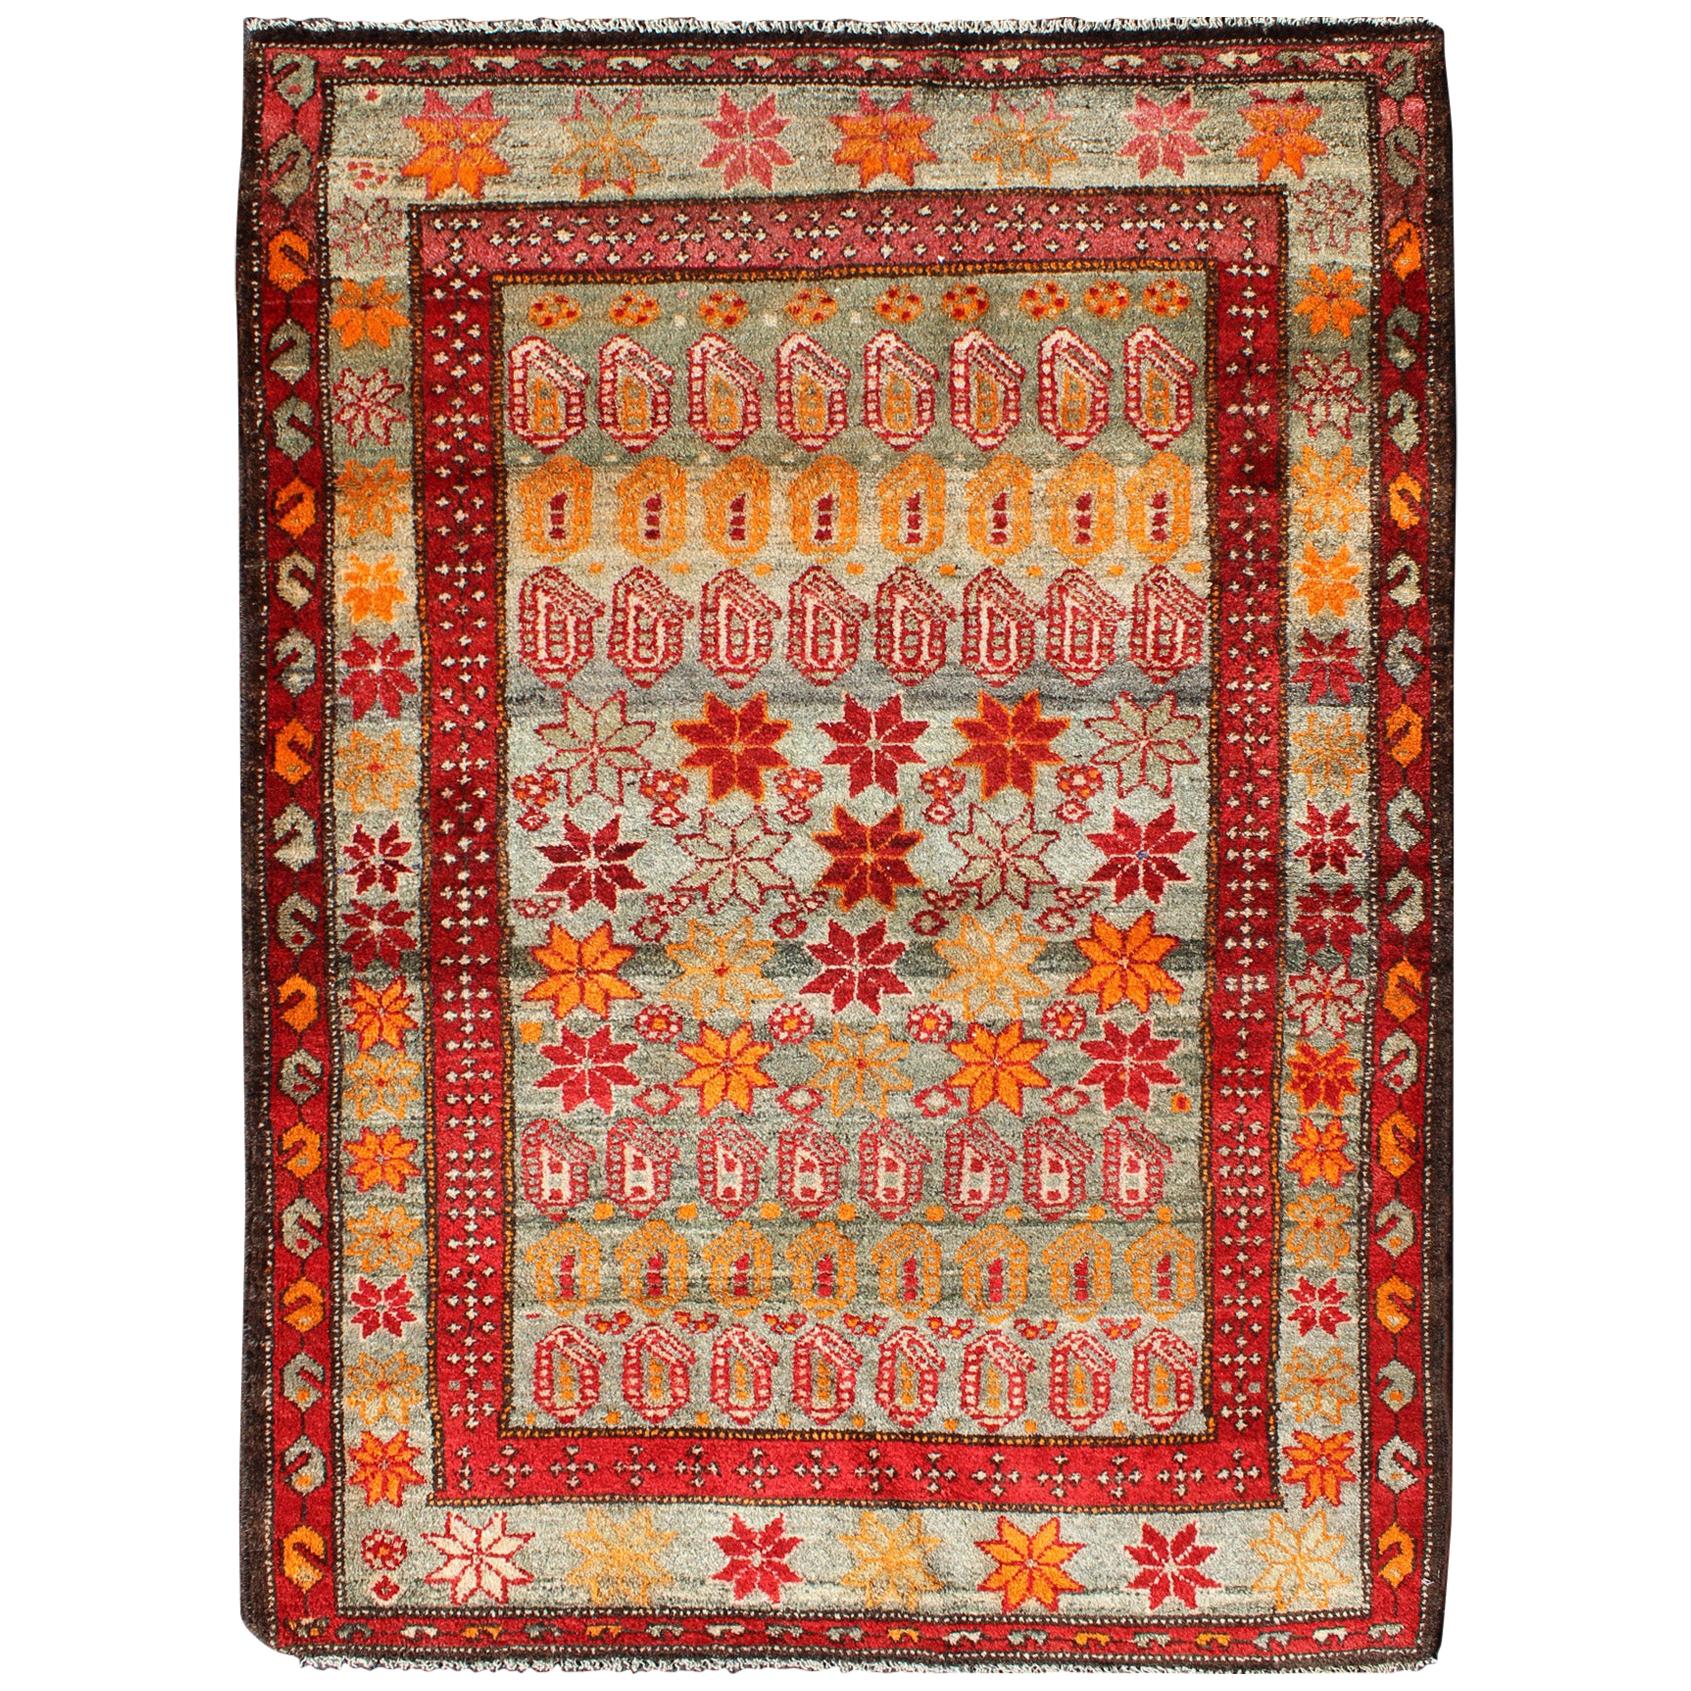 Colorful Vintage Persian Hamedan Rug with All-Over Motif Design For Sale